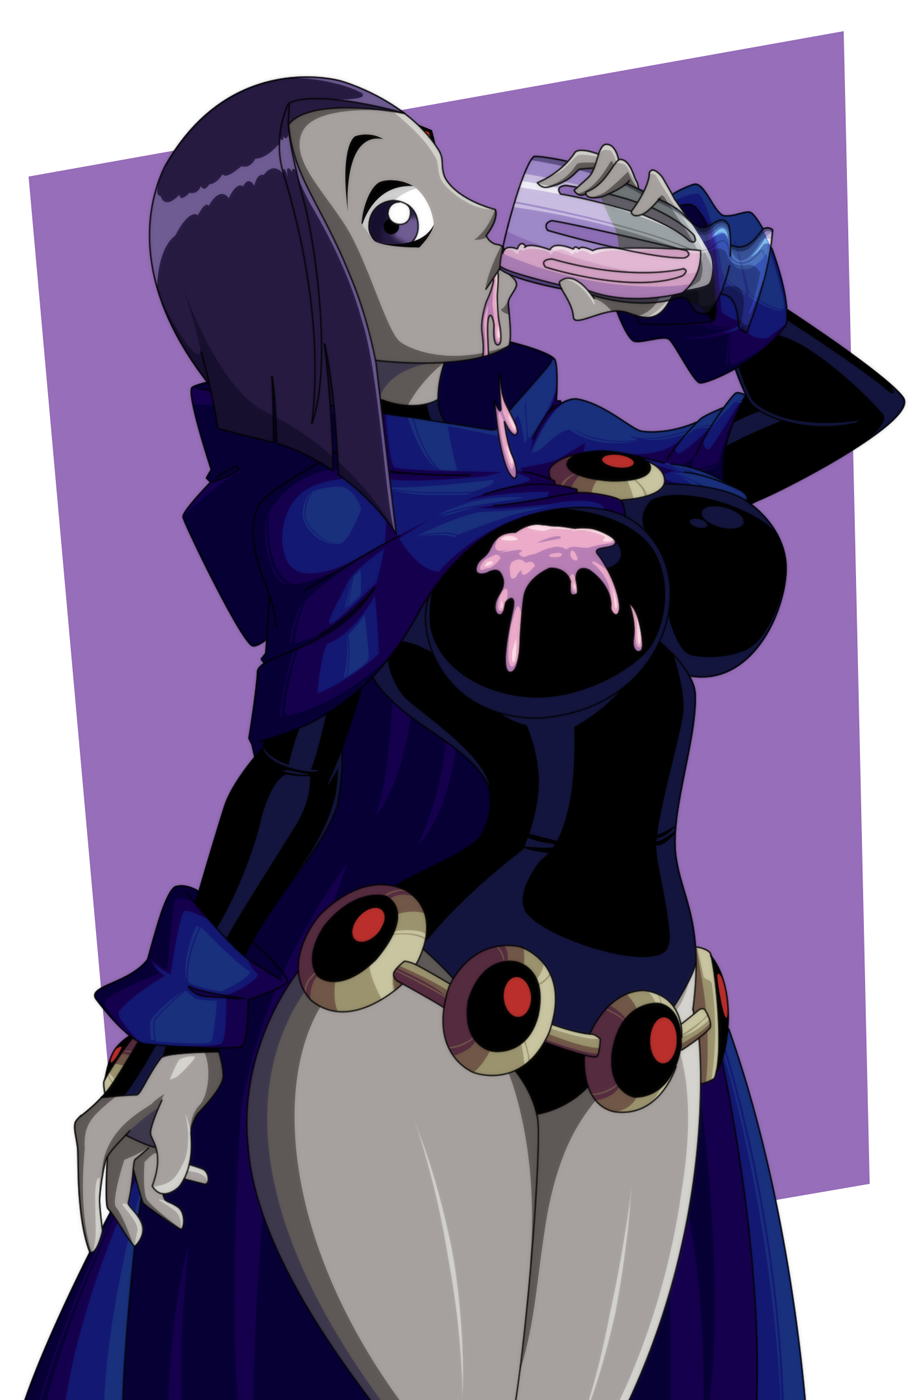 Raven drinks a milkshake.